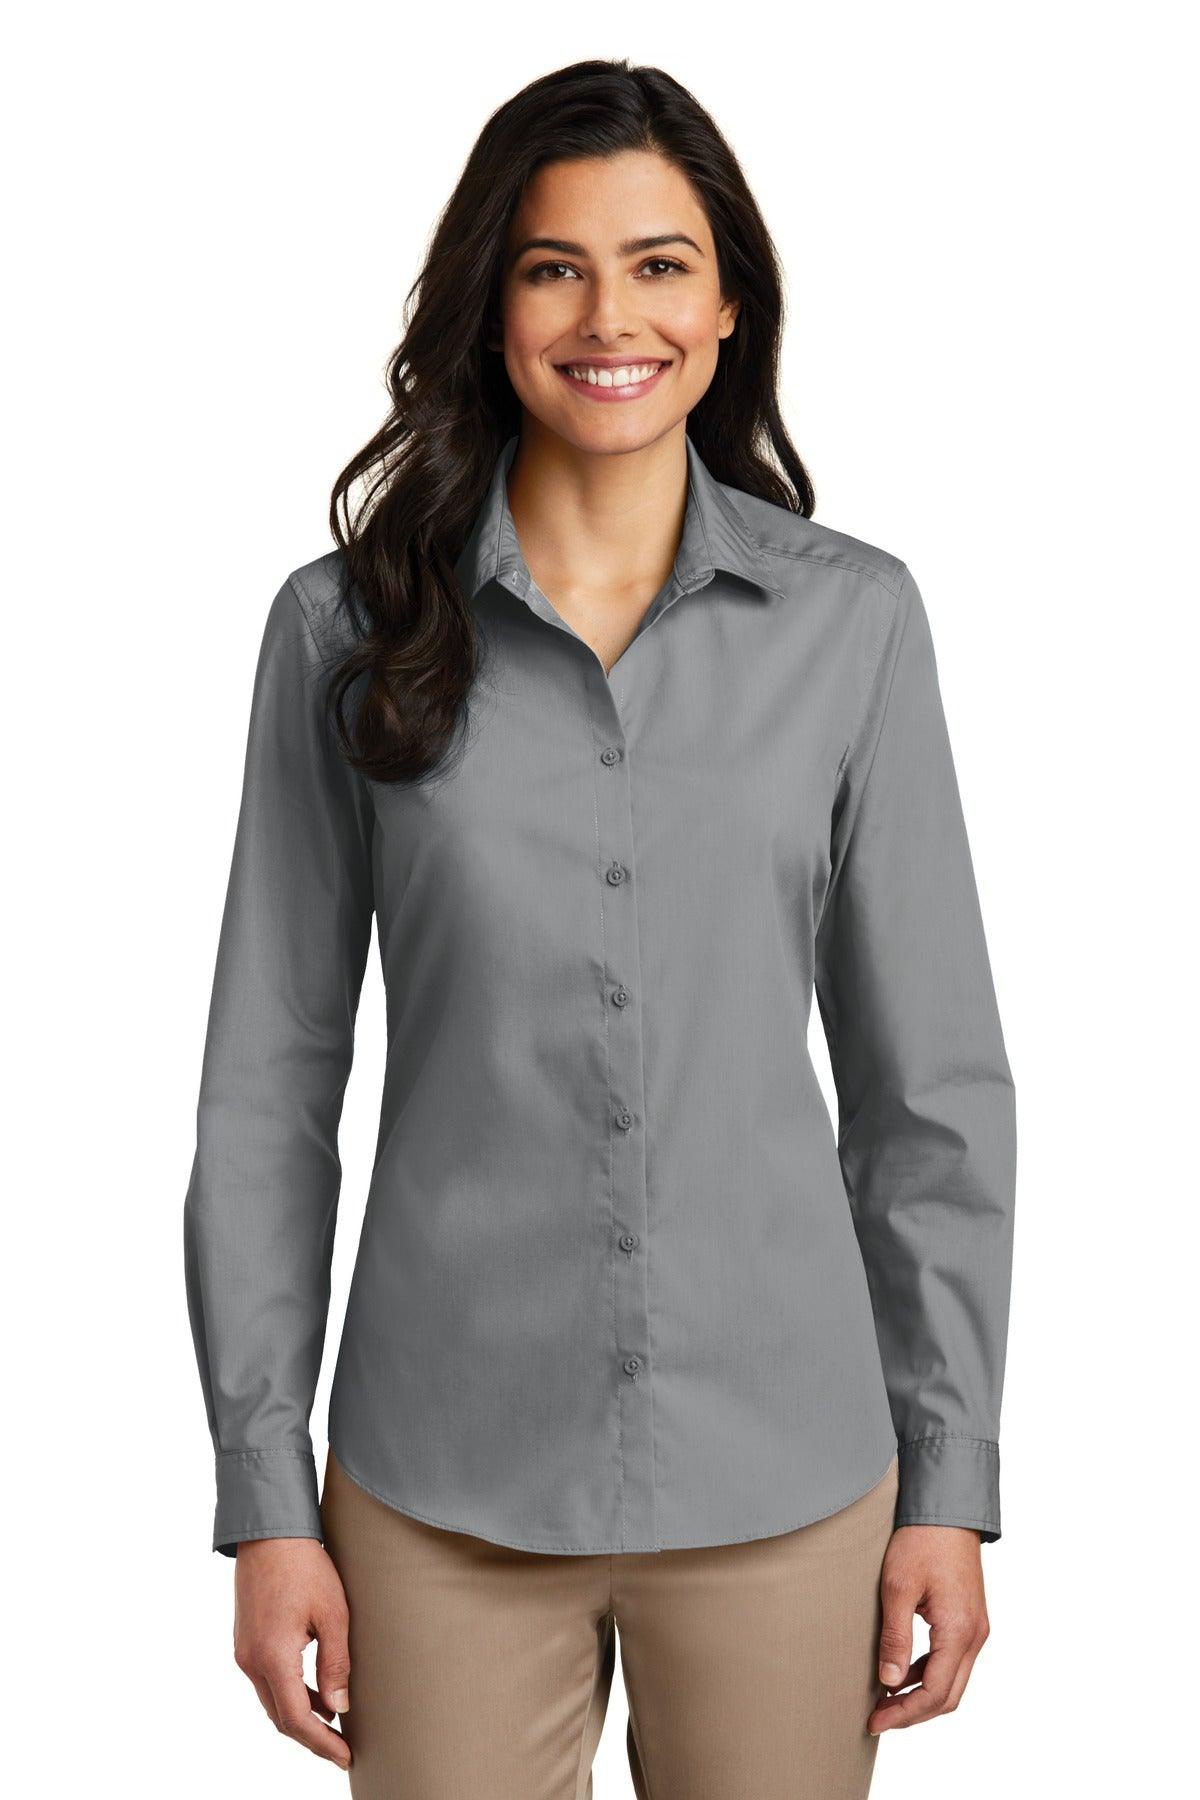 Port Authority Ladies Long Sleeve Carefree Poplin Shirt. LW100 - Dresses Max